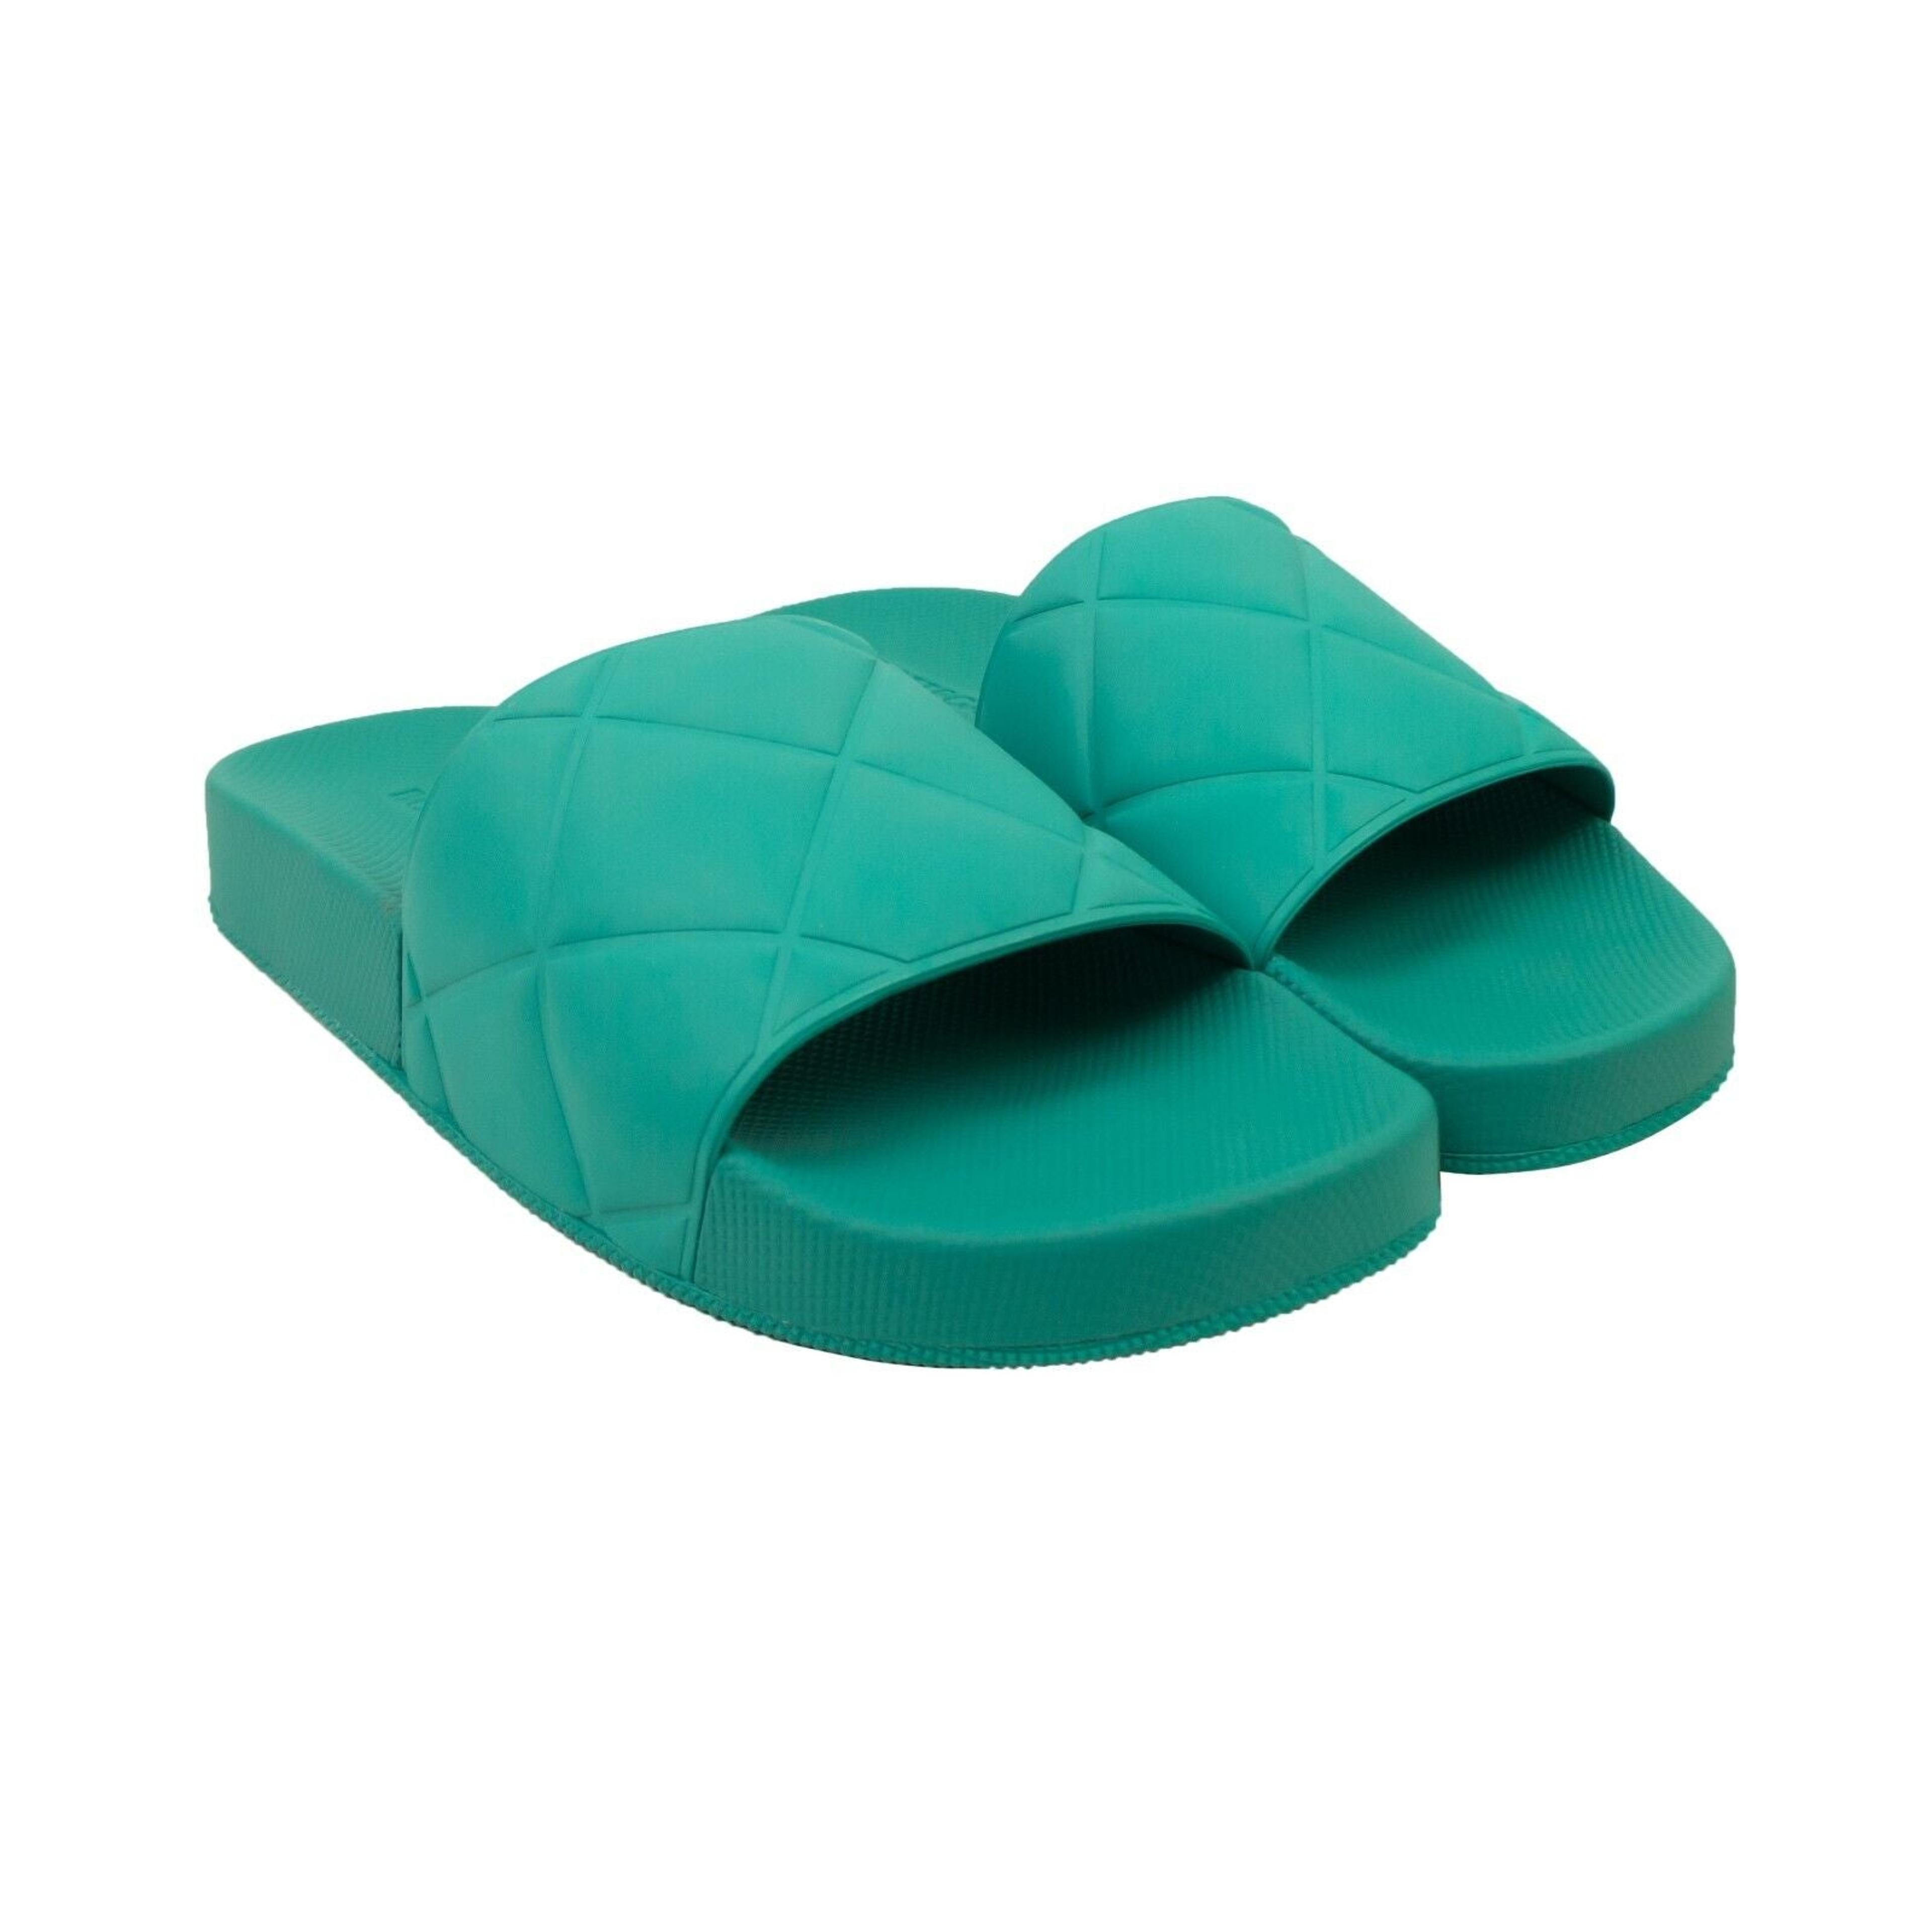 Alternate View 2 of Teal Blue Rubber Slide Sandals